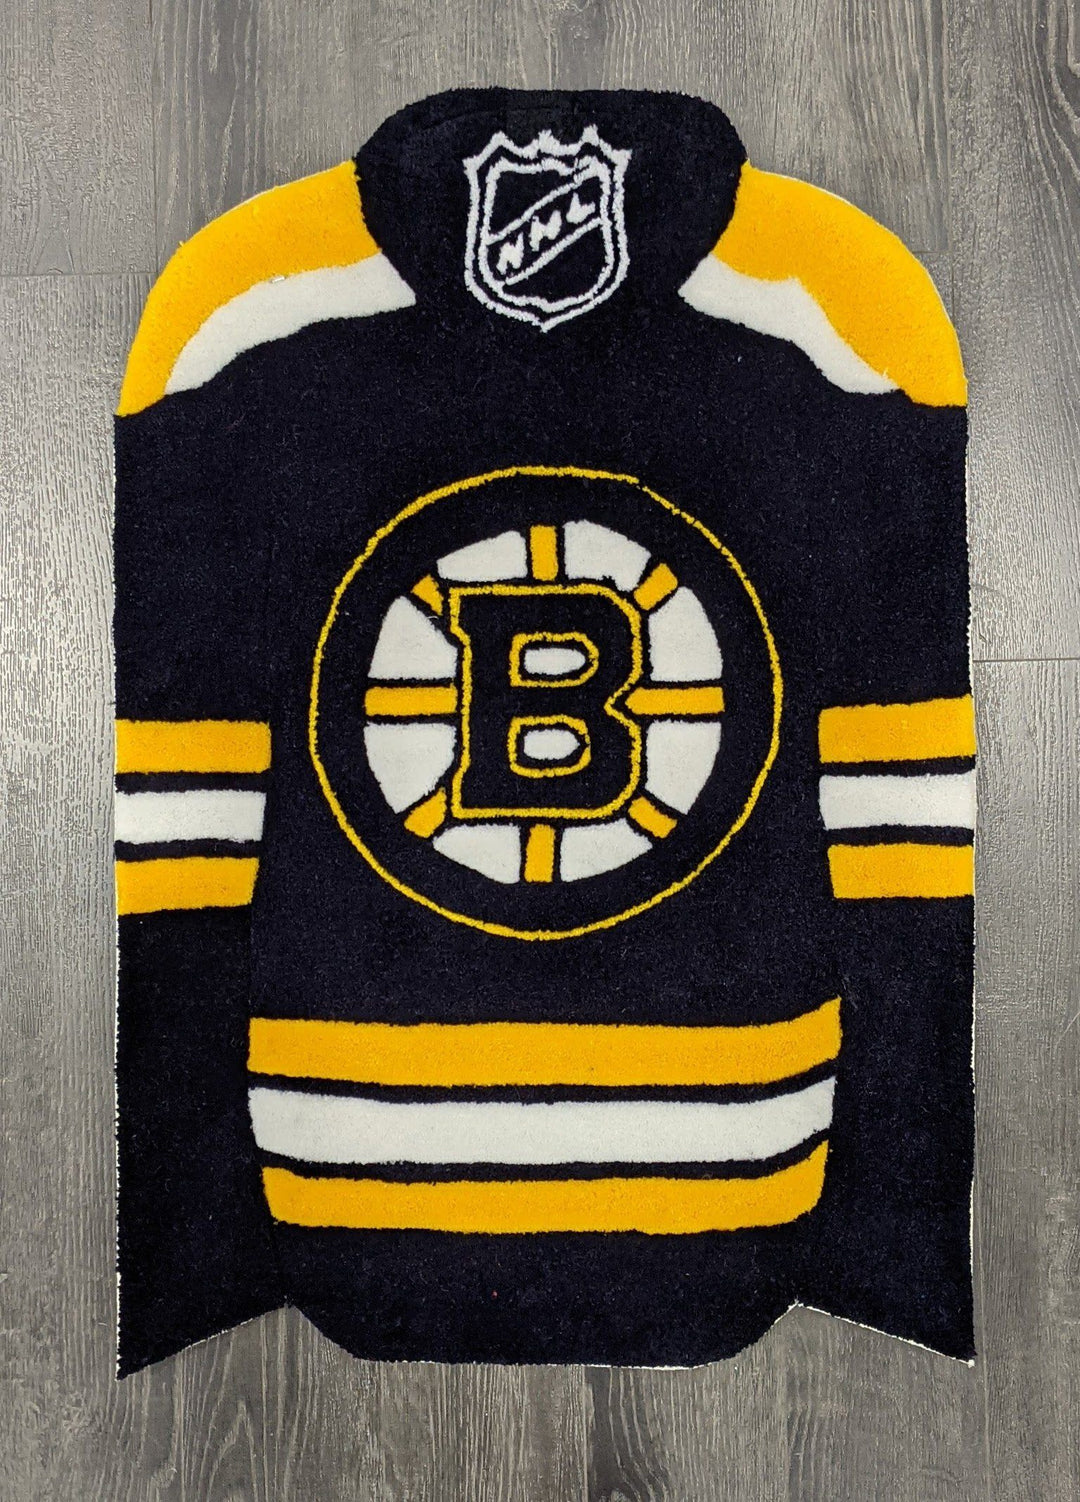 NHL Boston Bruins